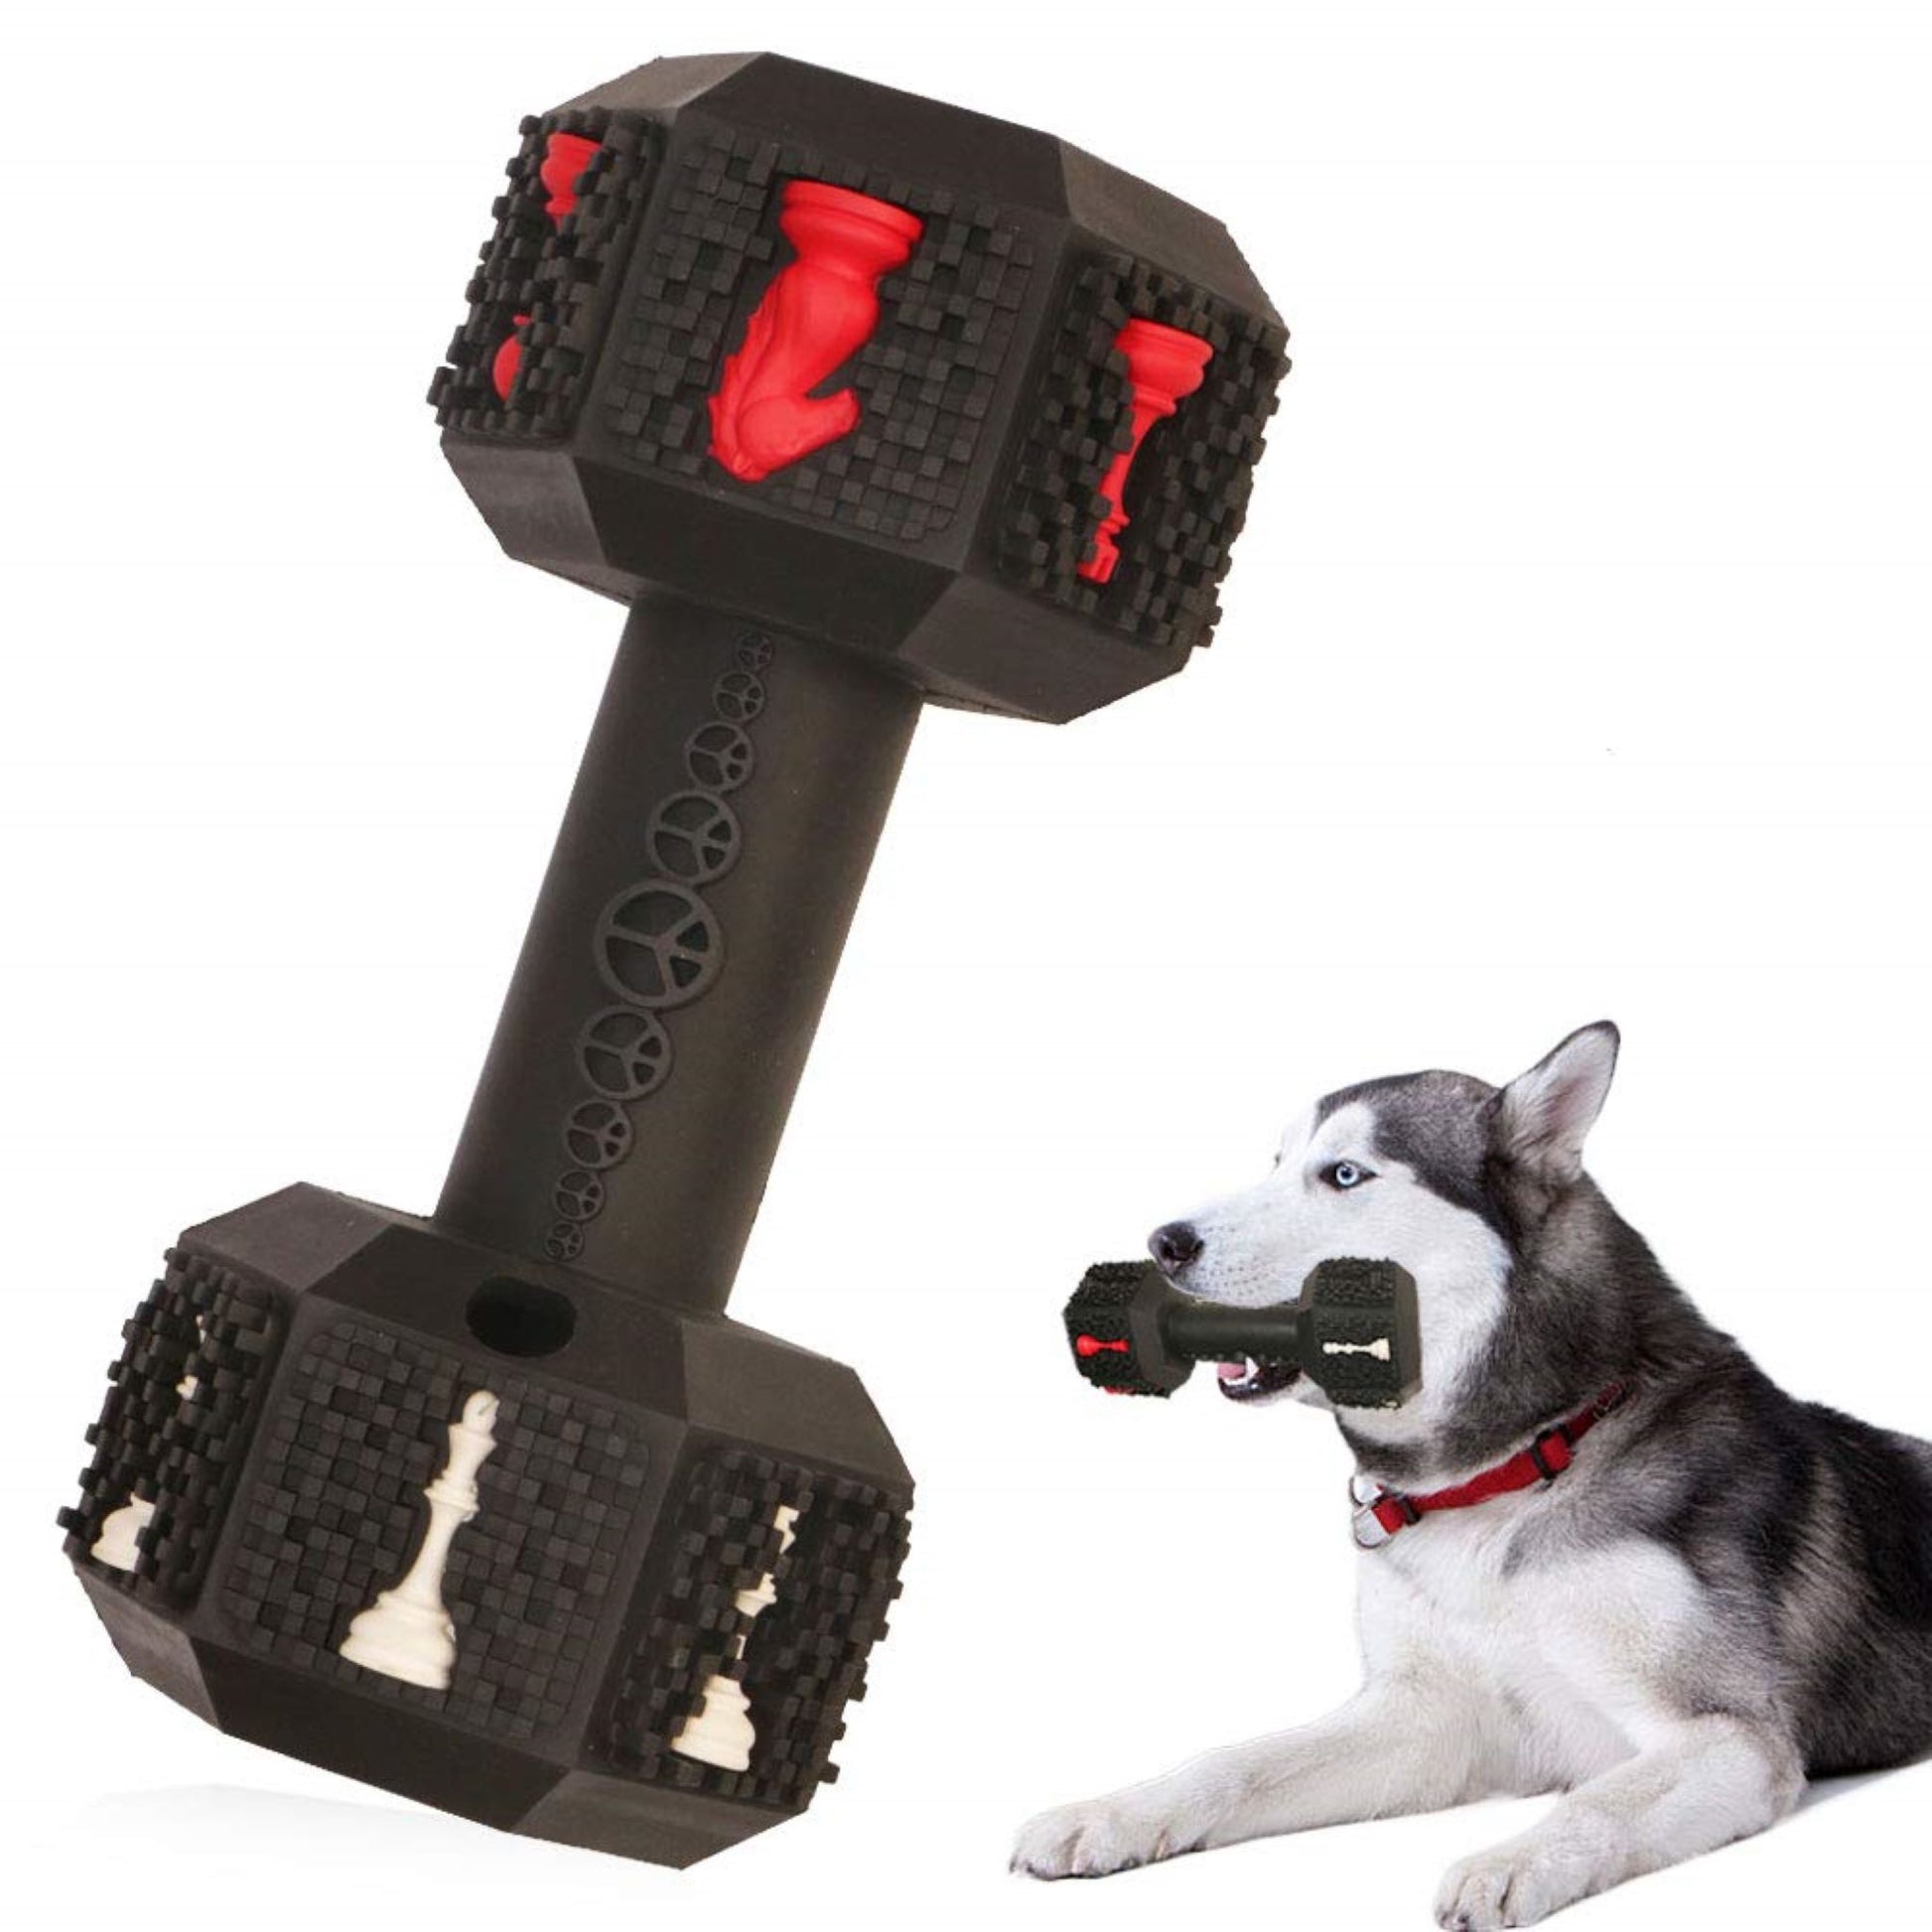 Bomb Design Dog Chew Toy – Royal Pets USA